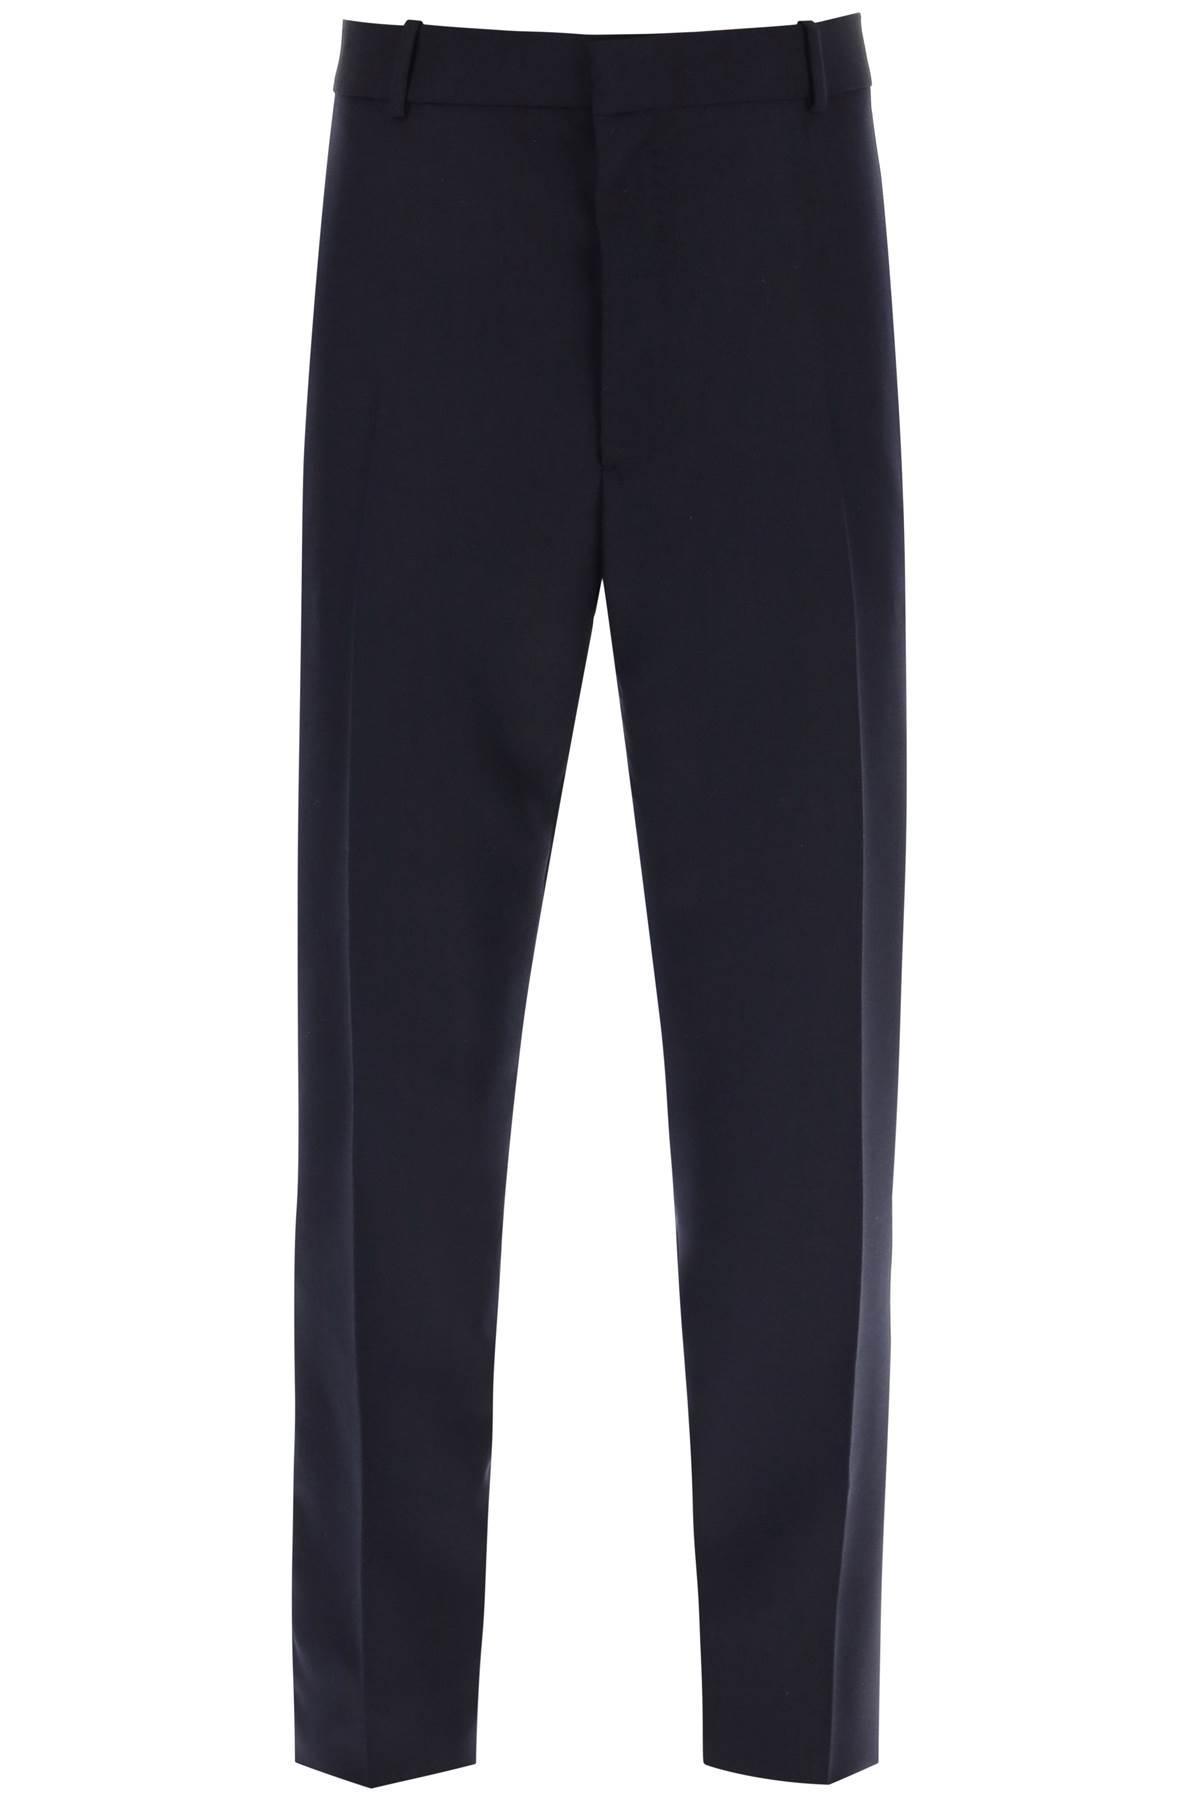 Cigarette trousers - Dark blue/Pinstriped - Ladies | H&M IN